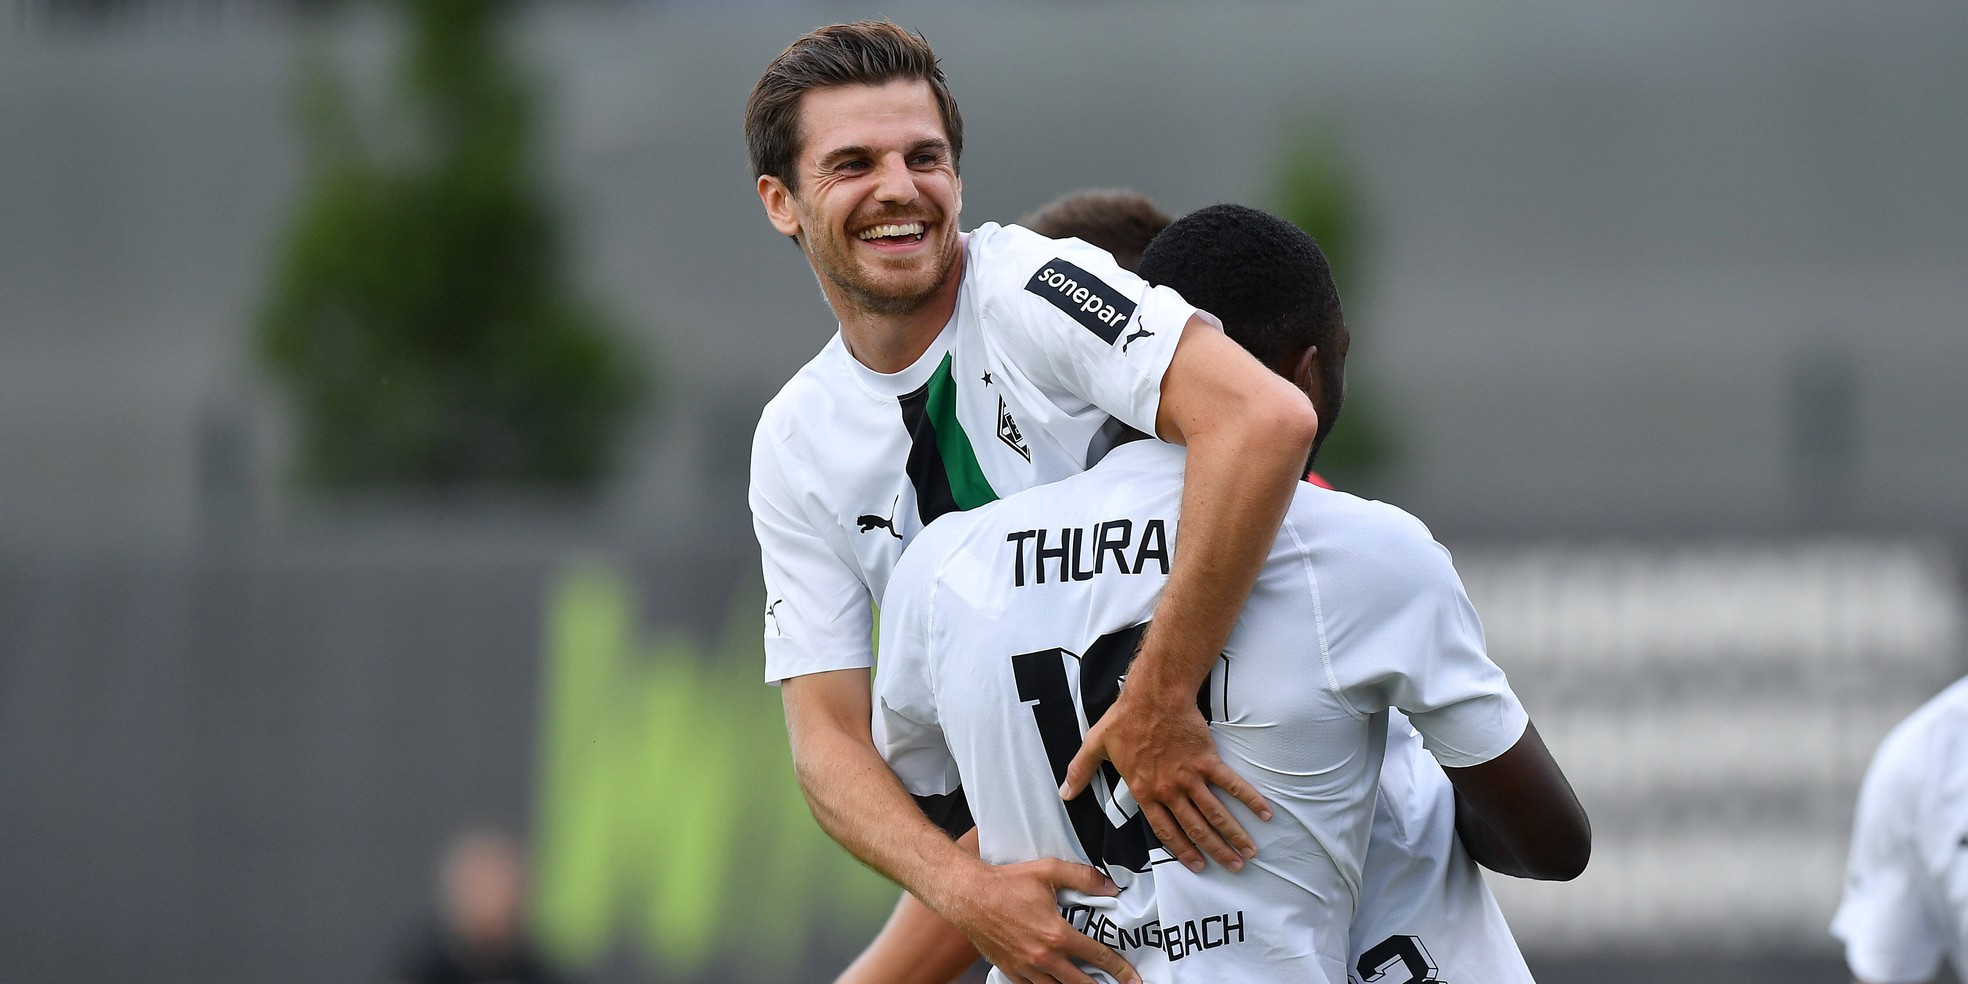 Testspiele: Jonas Hofmann führt Borussia Mönchengladbach zu 5:2-Sieg